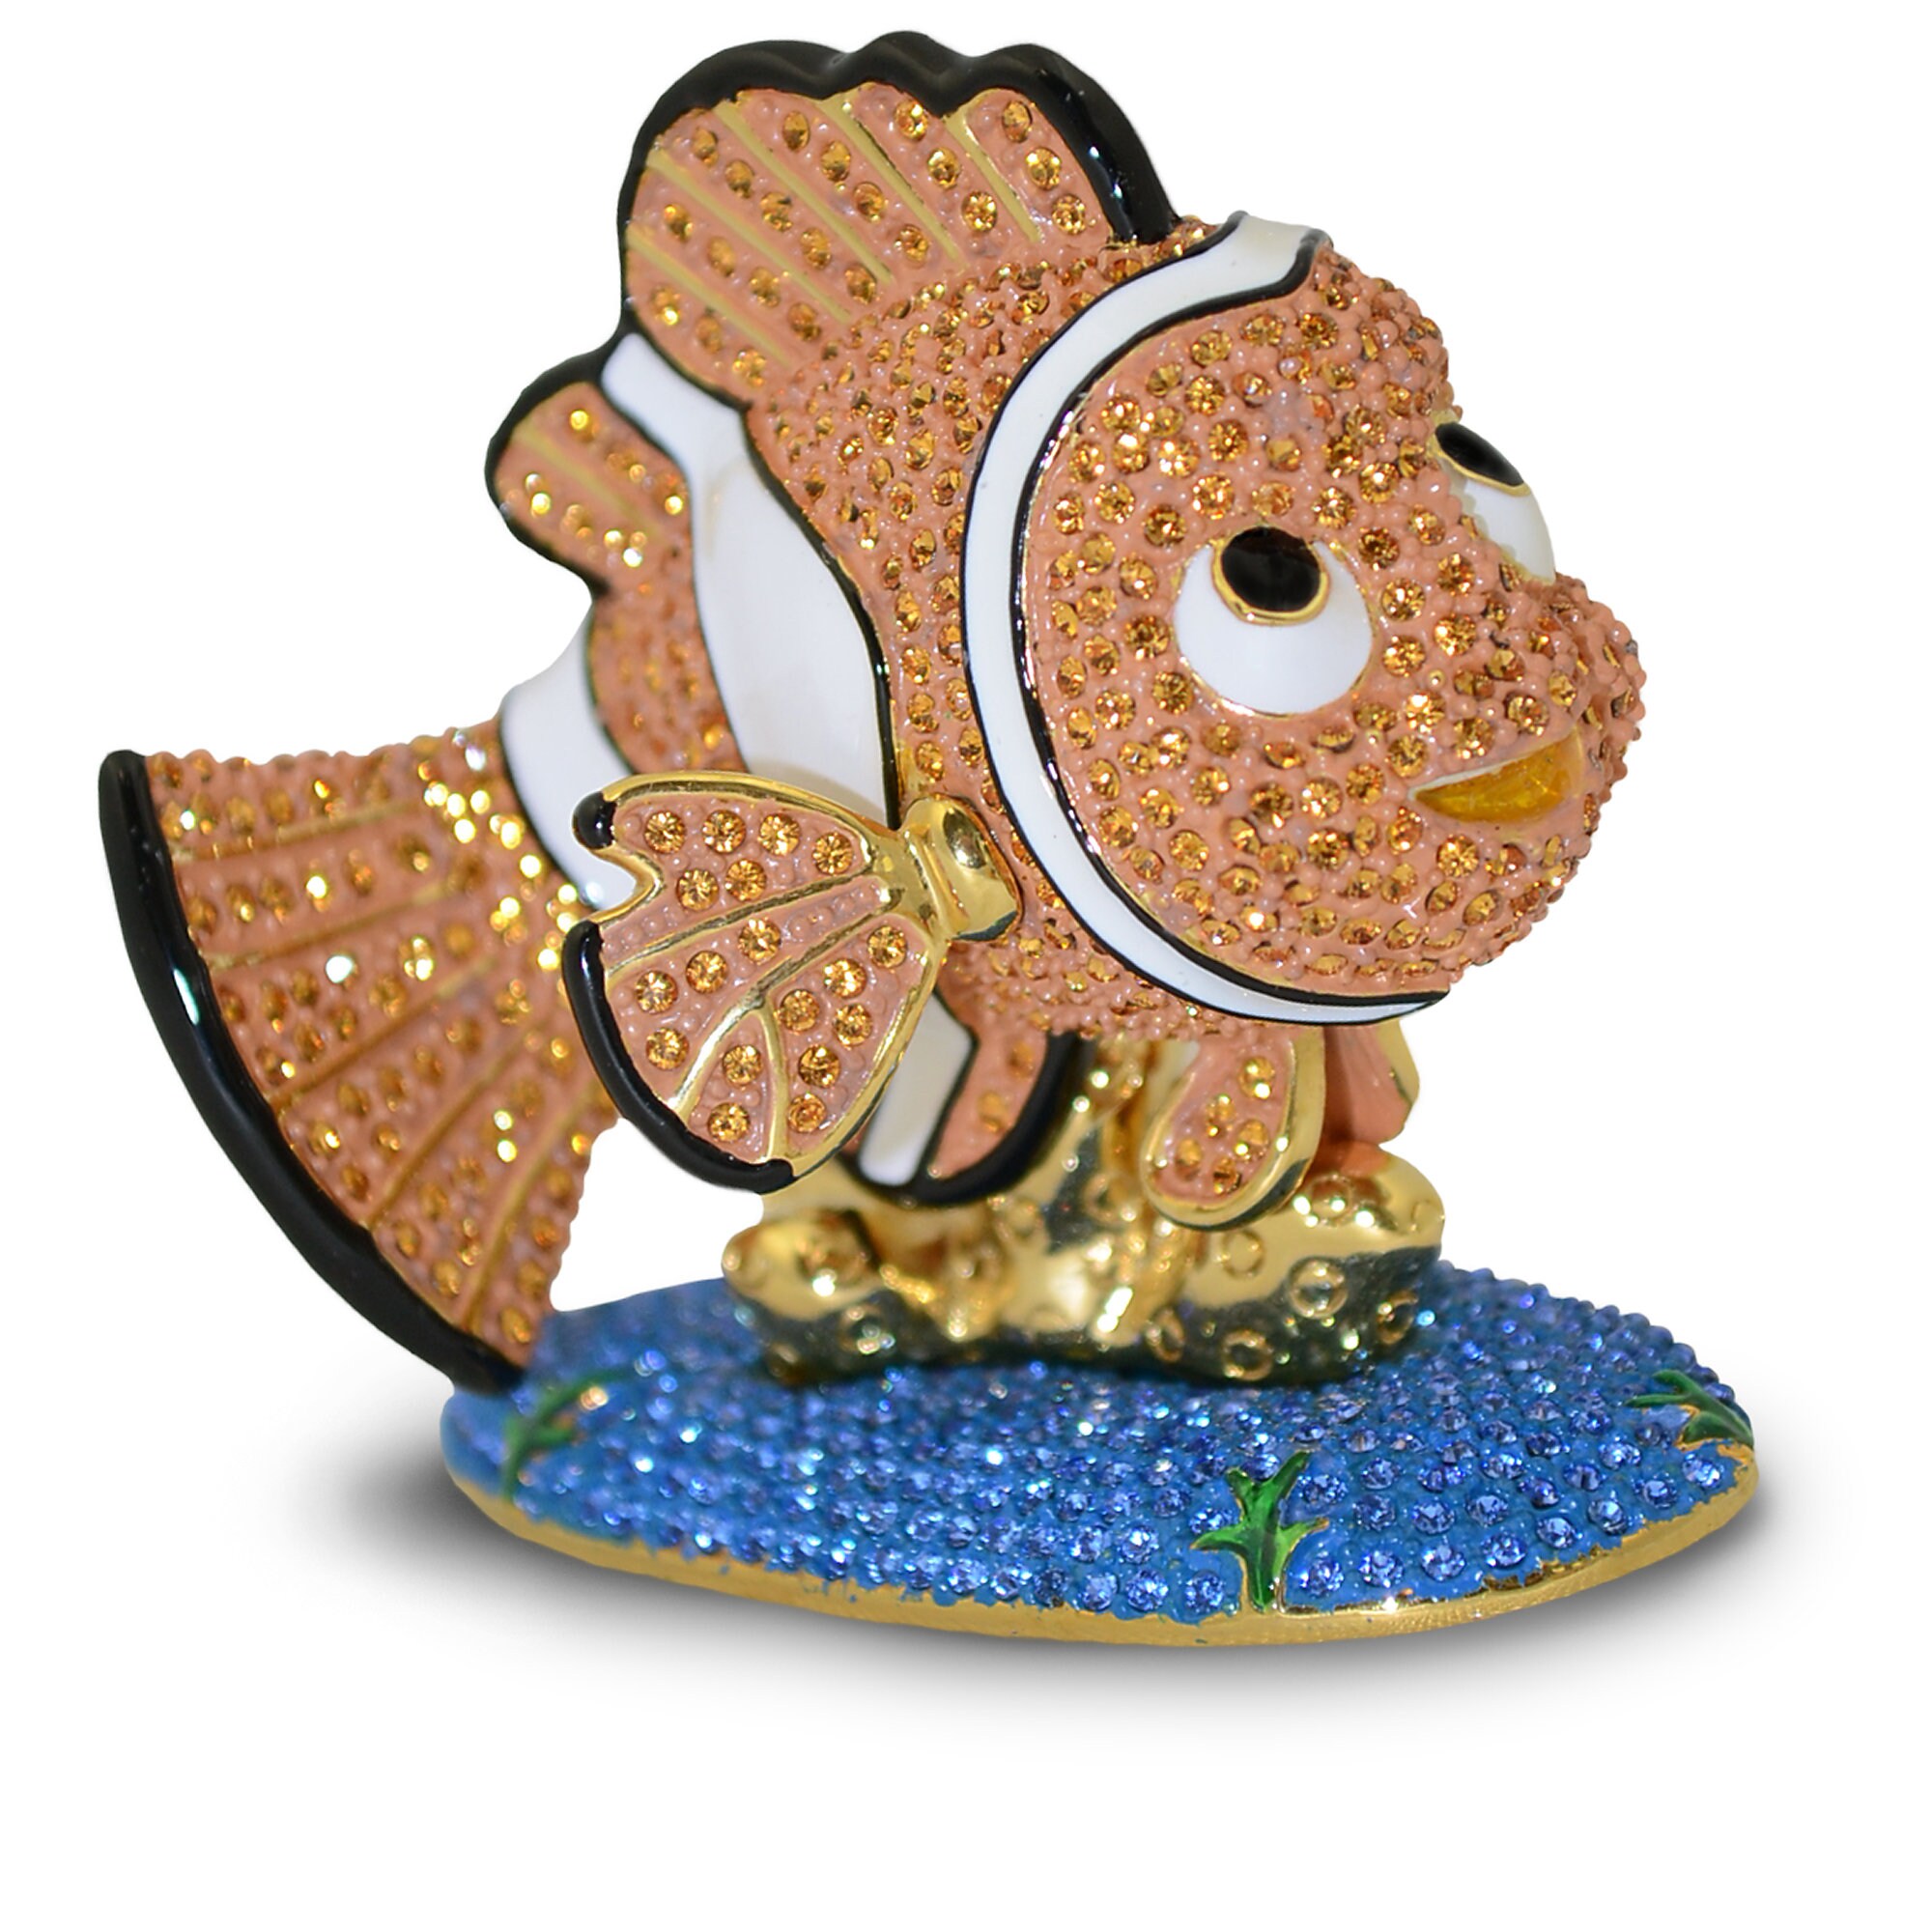 Jeweled Finding Nemo Figurine by Arribas -- Nemo